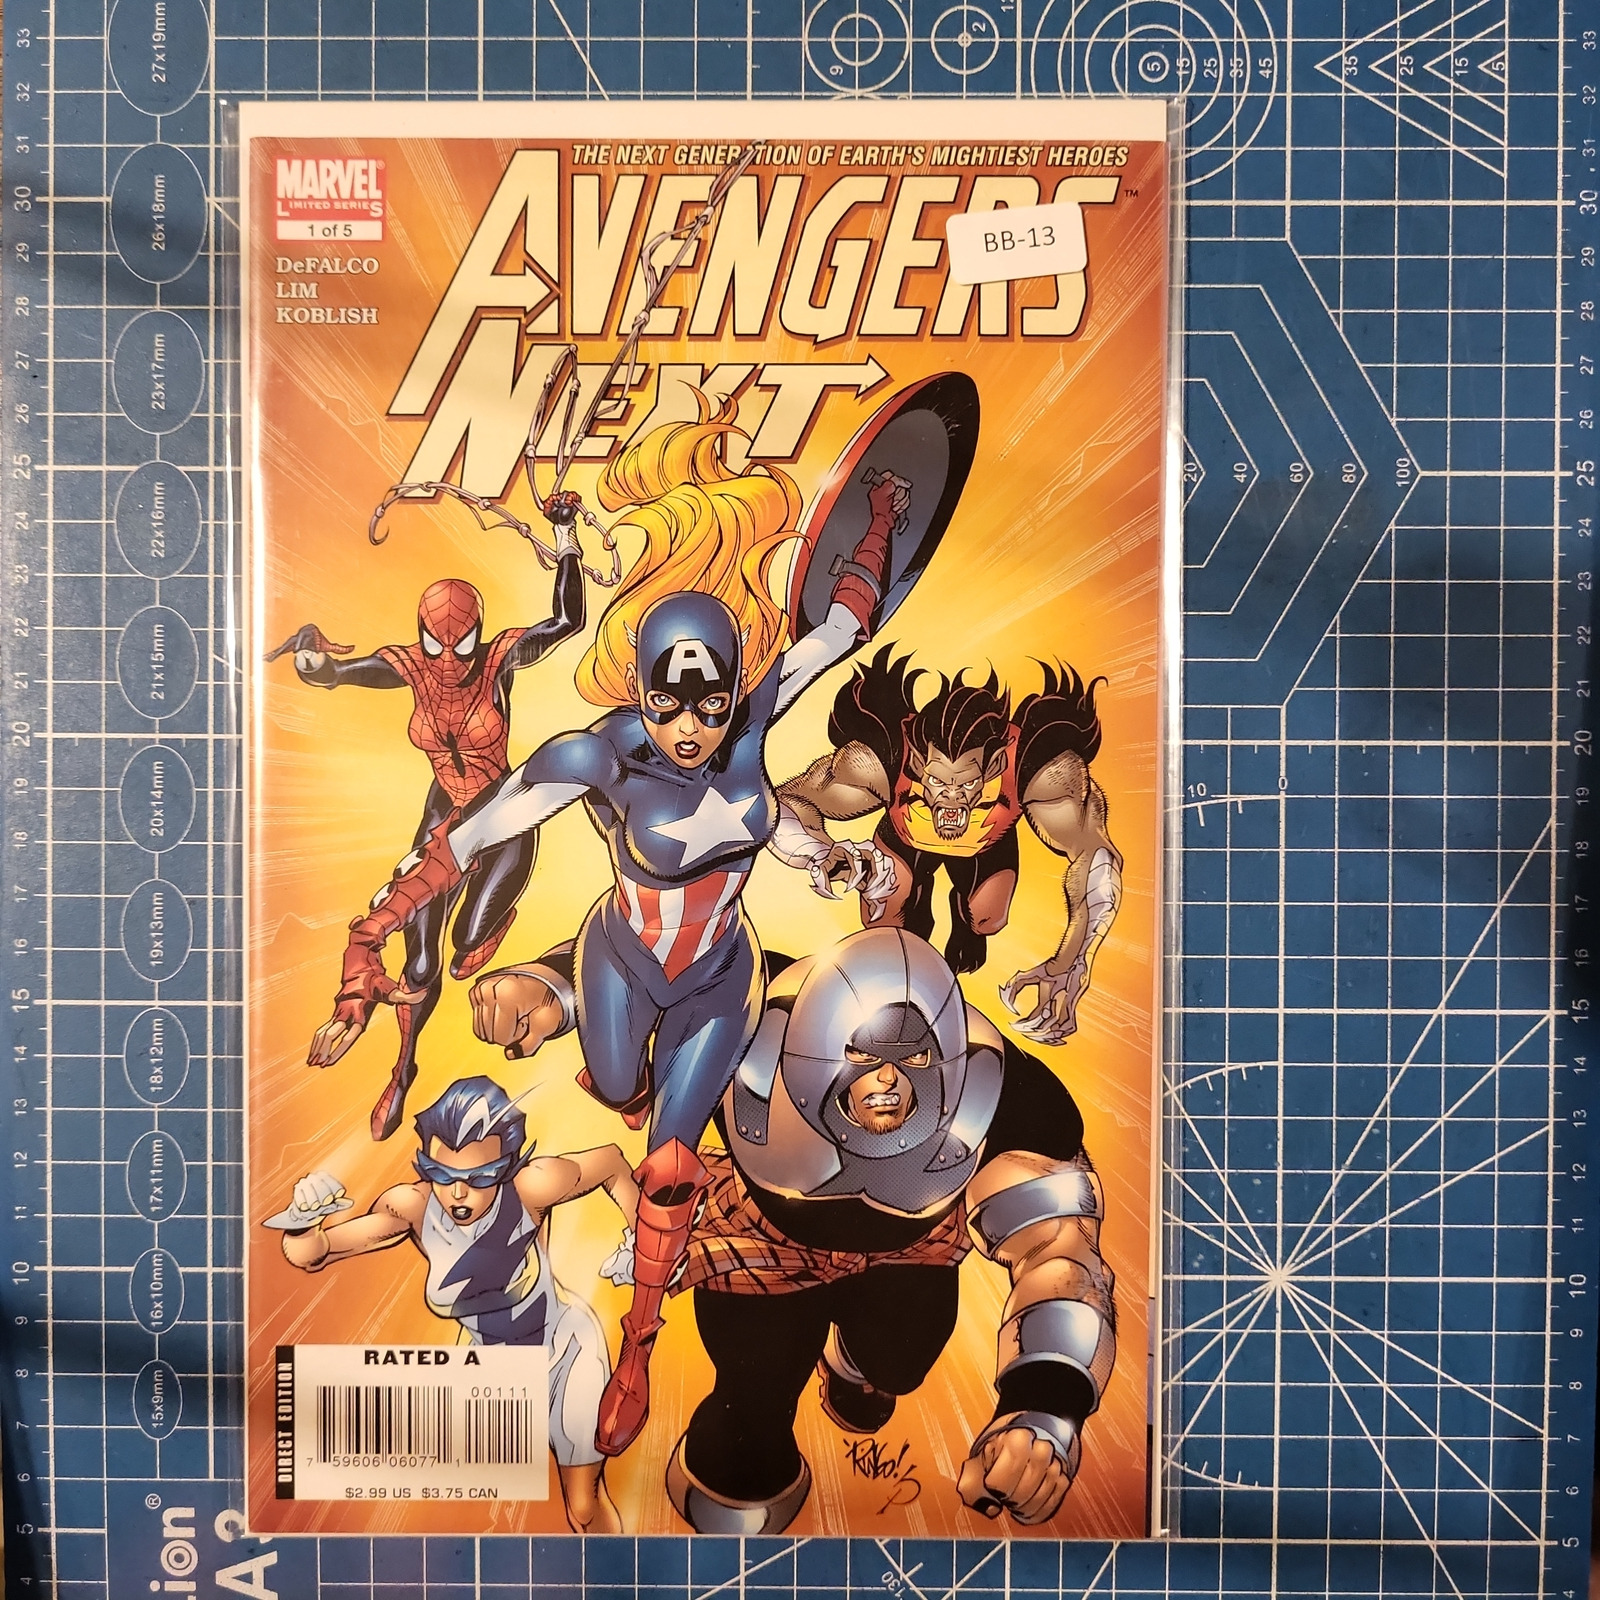 AVENGERS NEXT #1 8.0+ MARVEL COMIC BOOK BB-13